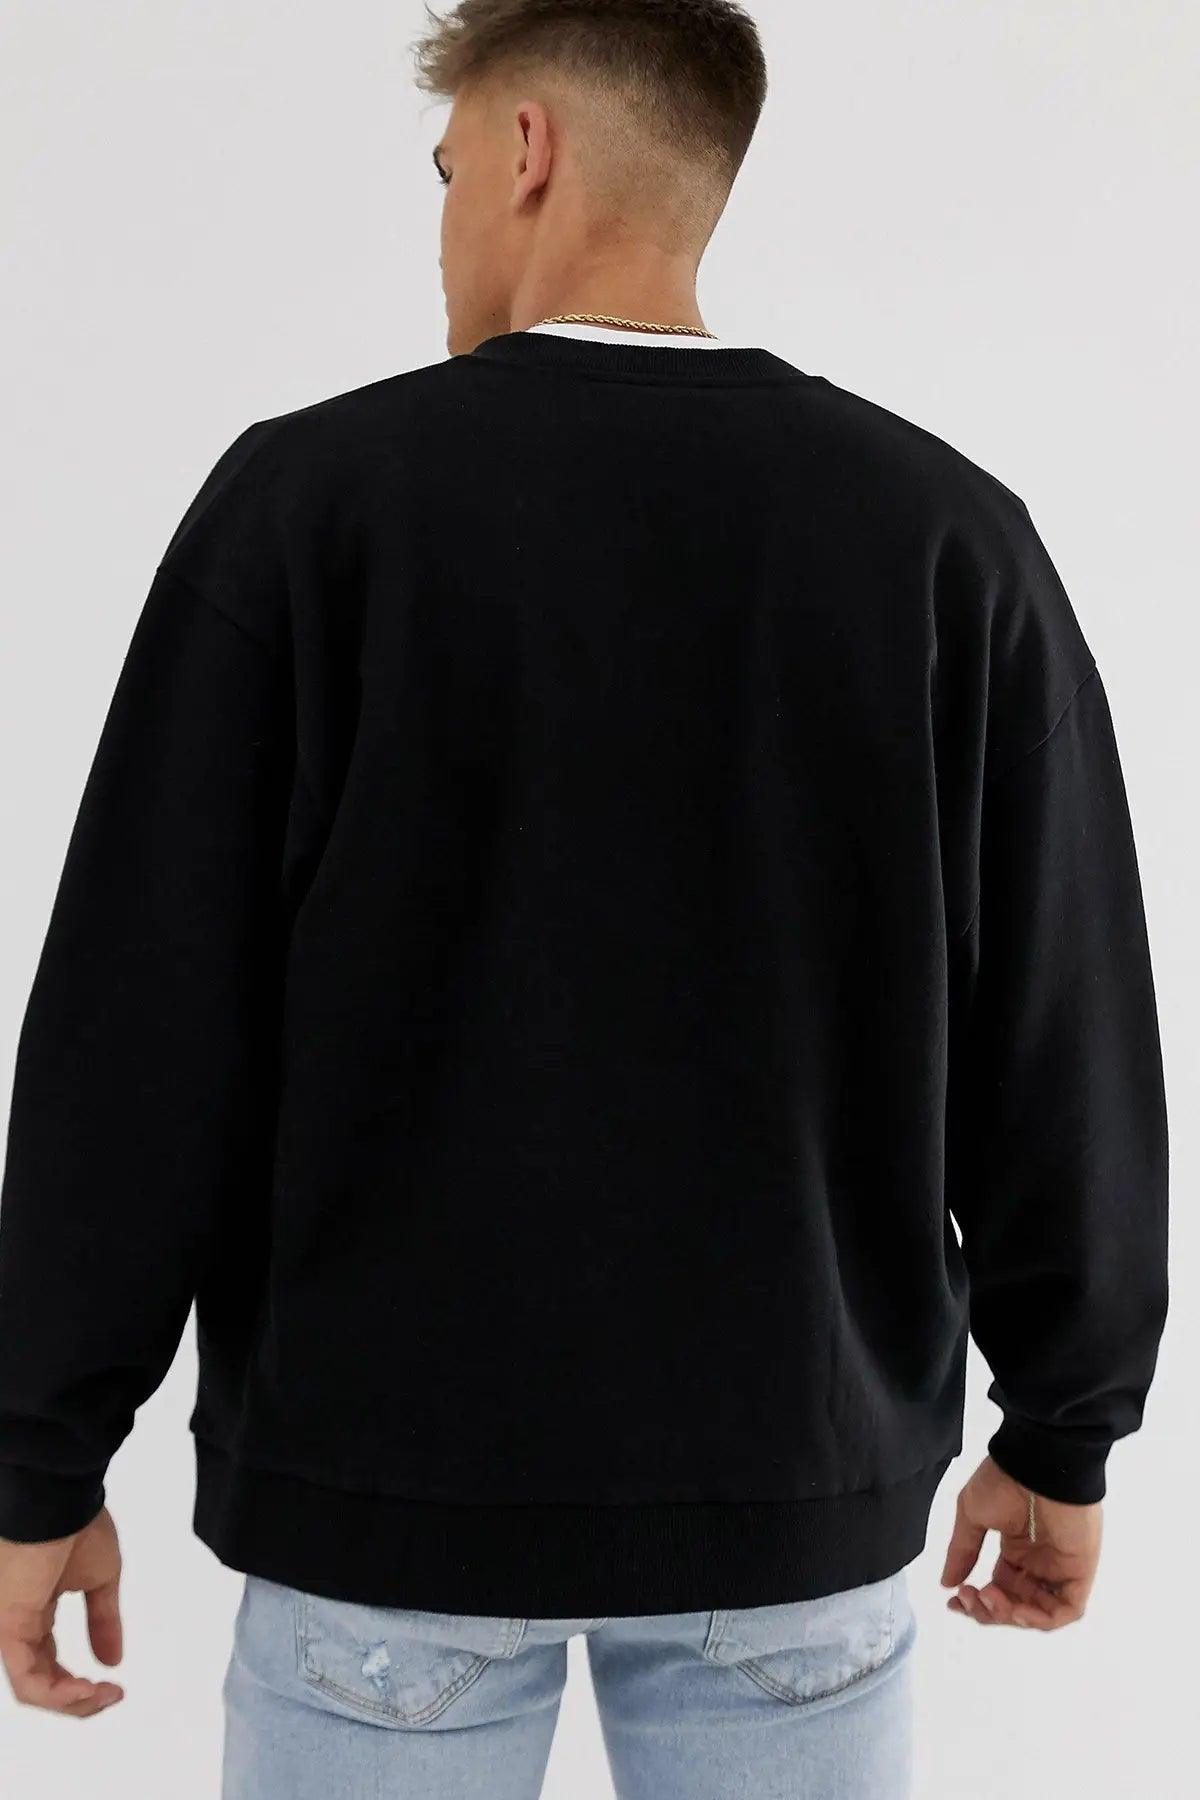 Society Oversize Erkek Sweatshirt - PΛSΛGE